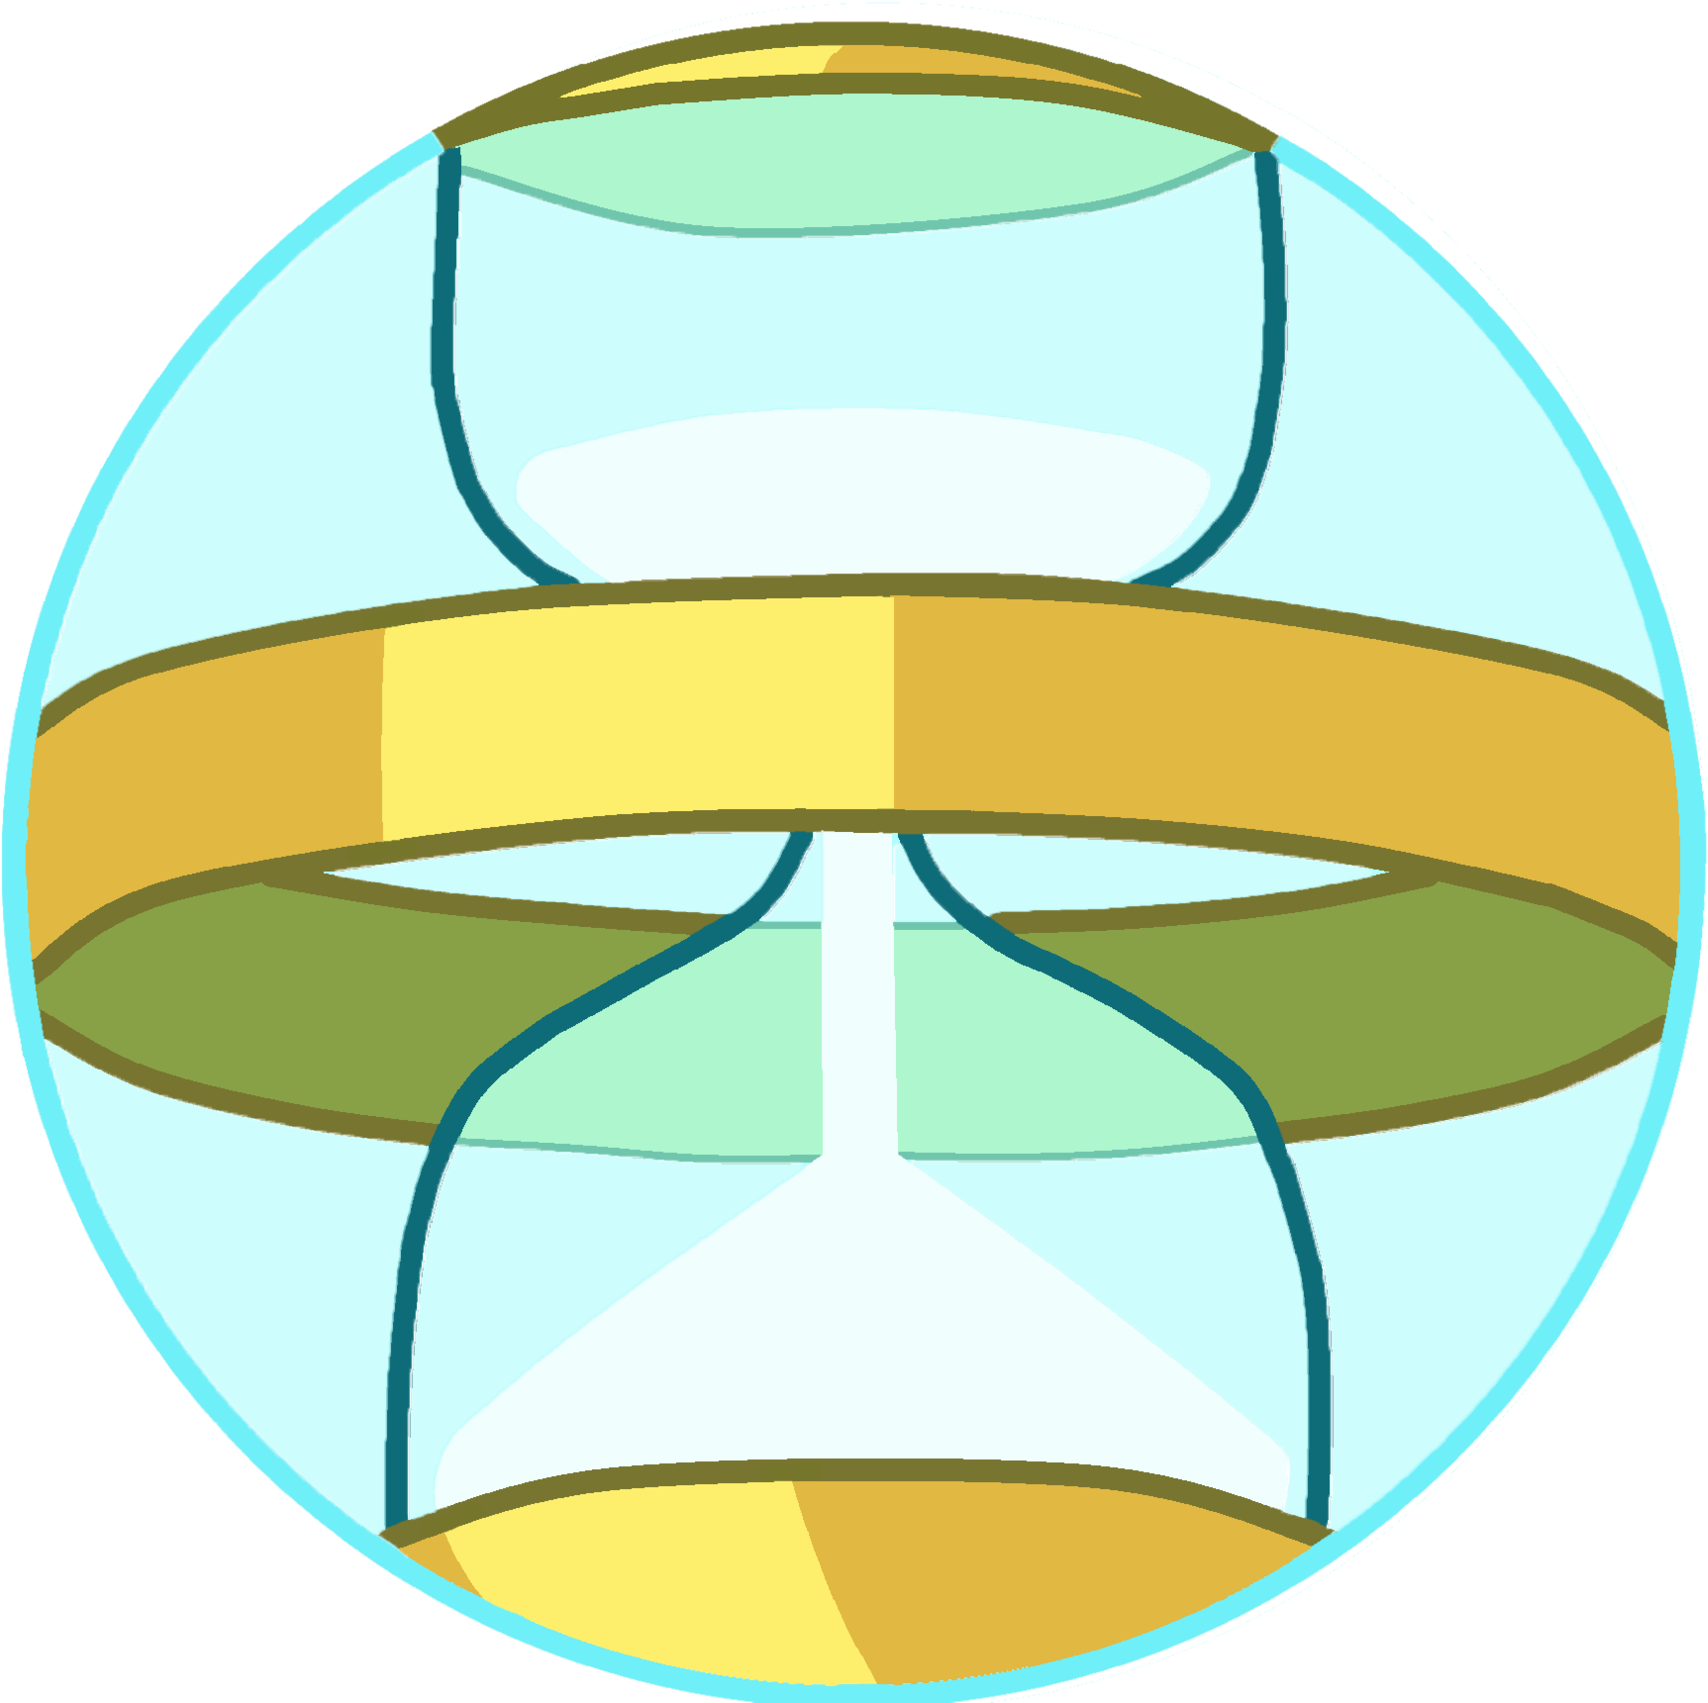 Steven Universe The Hourglass (2000x1752)